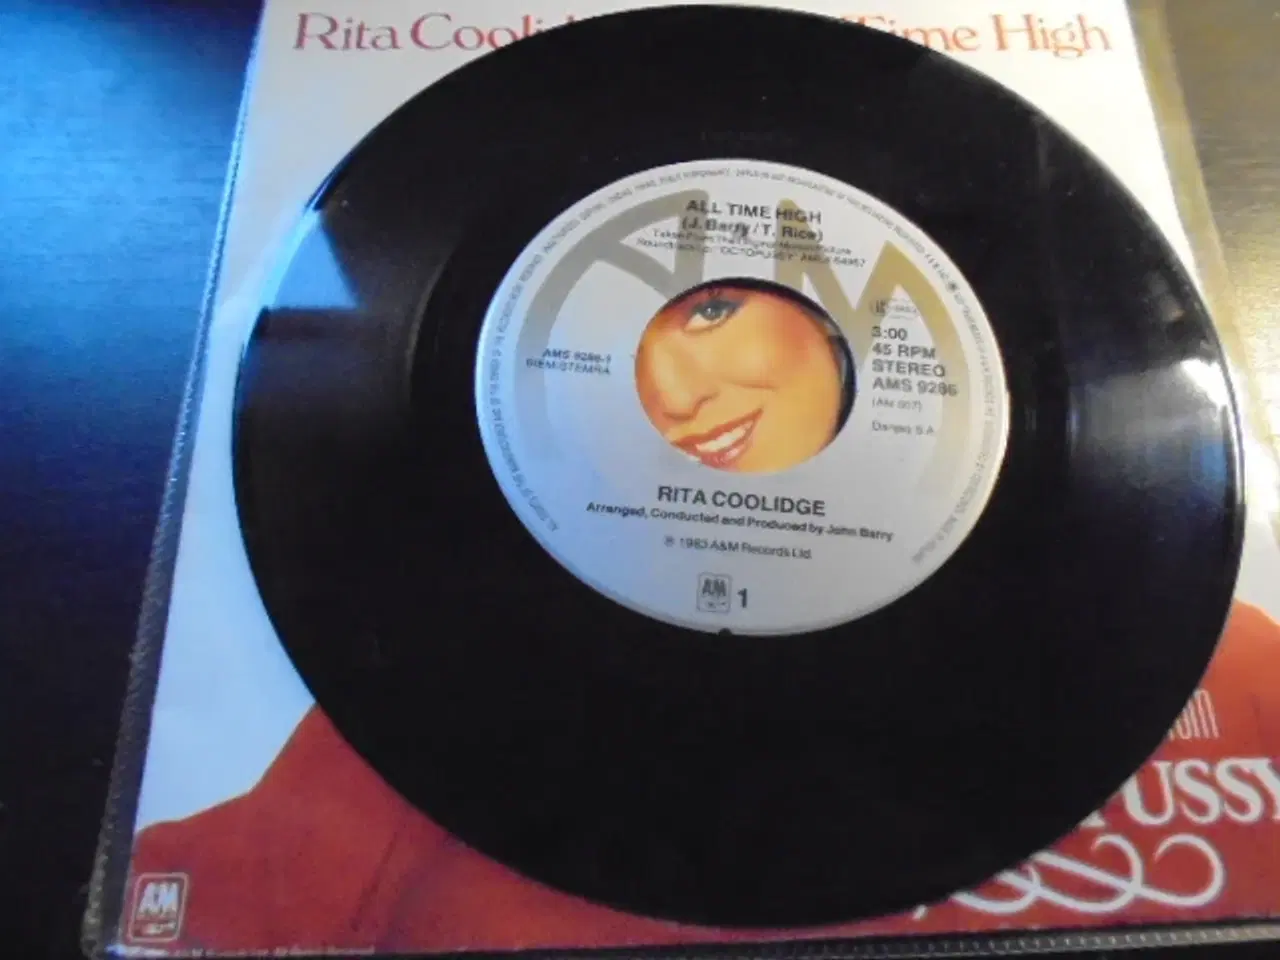 Billede 3 - Single - Rita Coolidge - All Time High